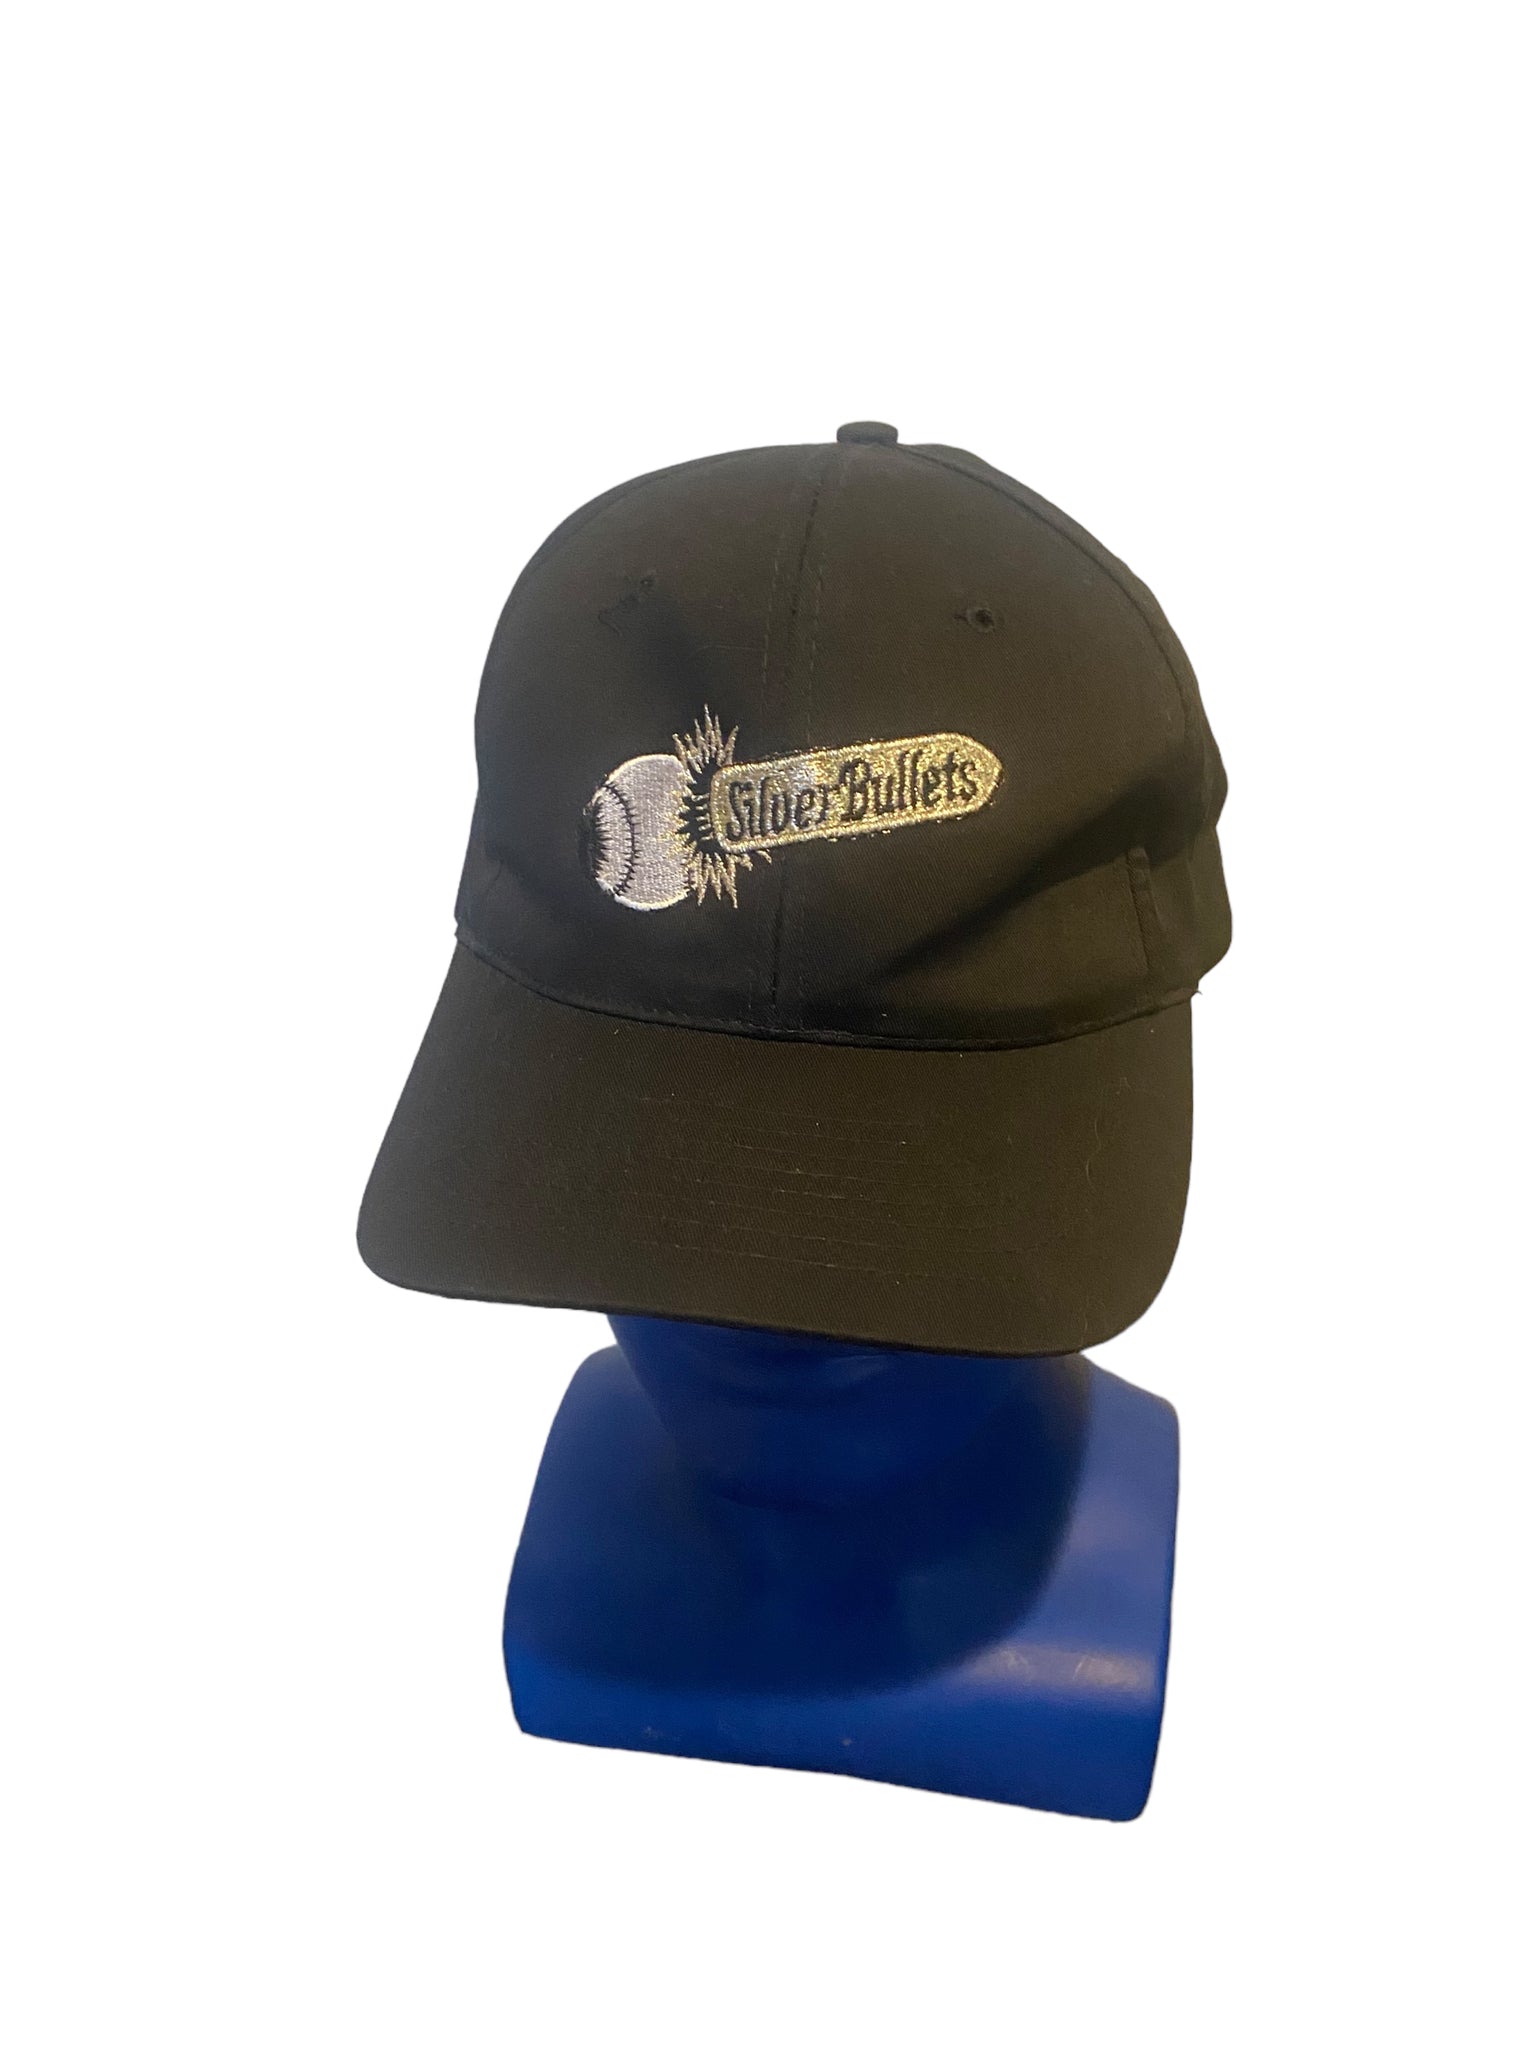 vintage nissin cap baseball silver bullets embroidered logo snapback hat Size M